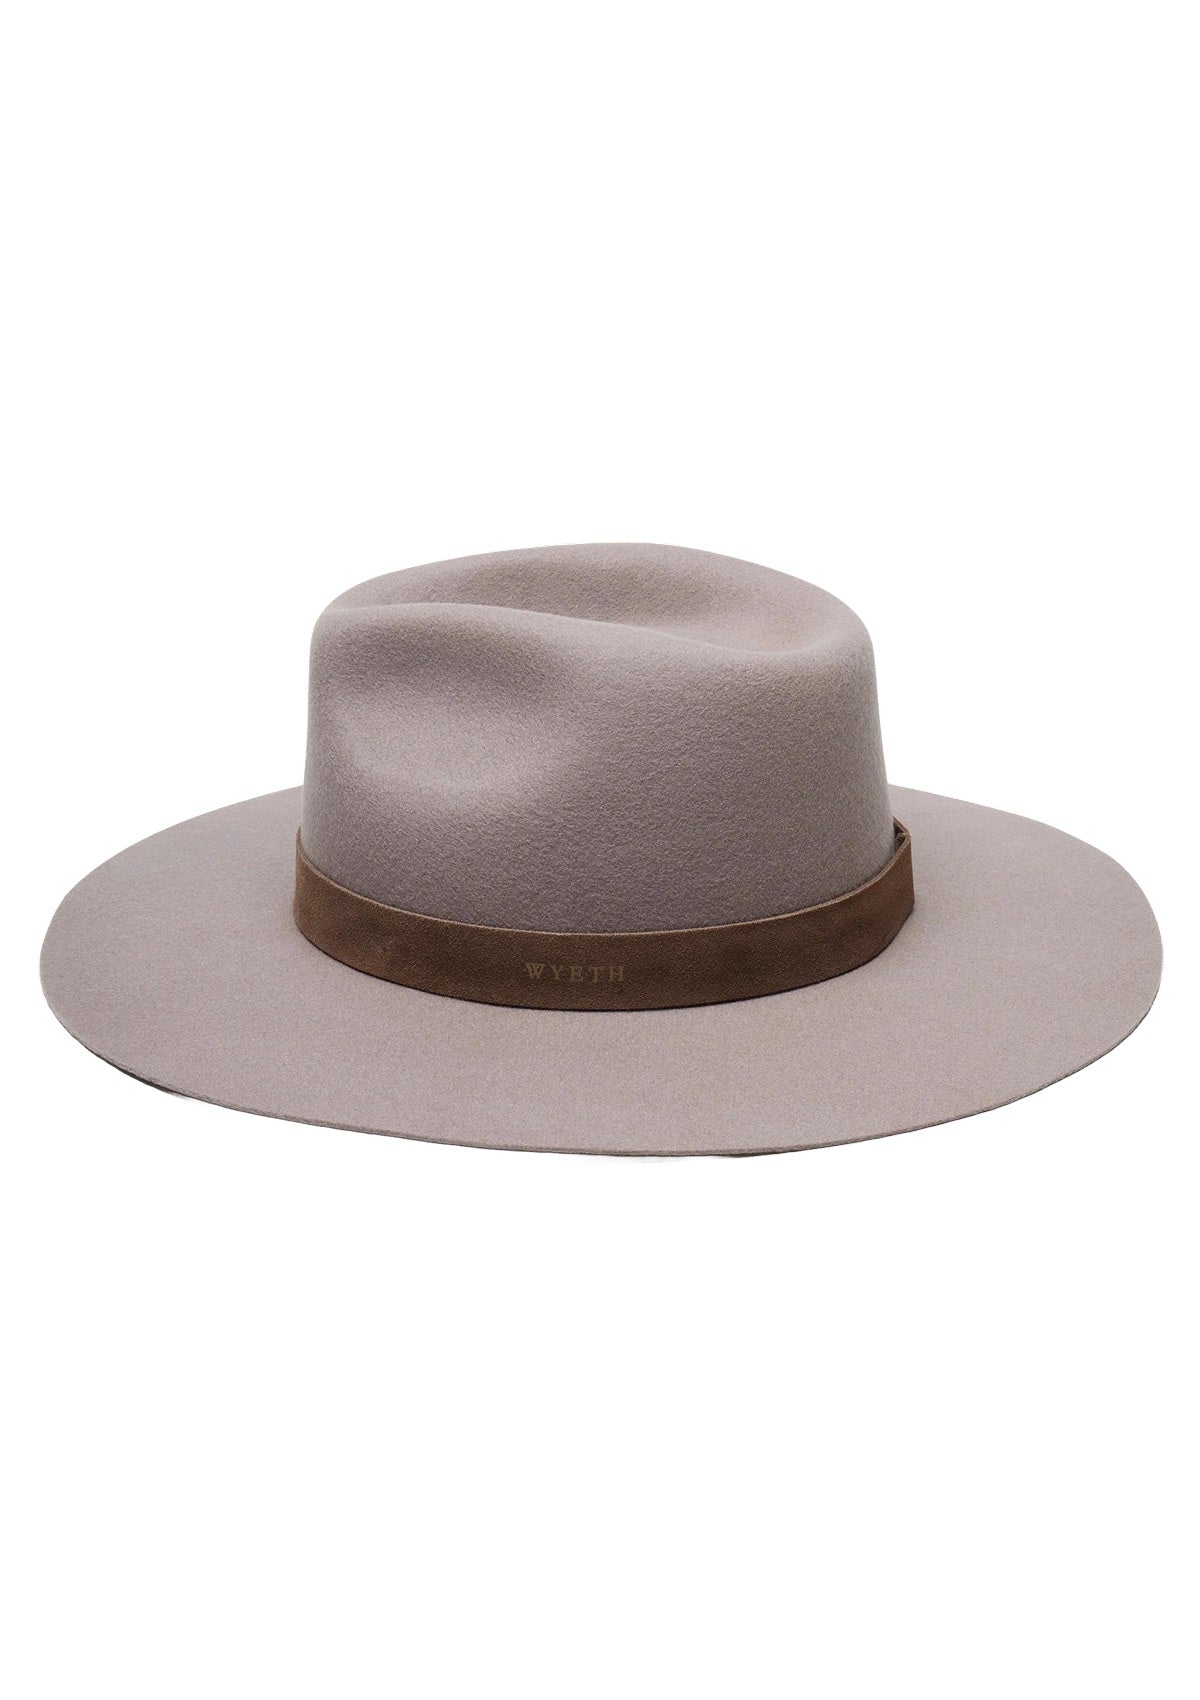 River Hat in Light Grey